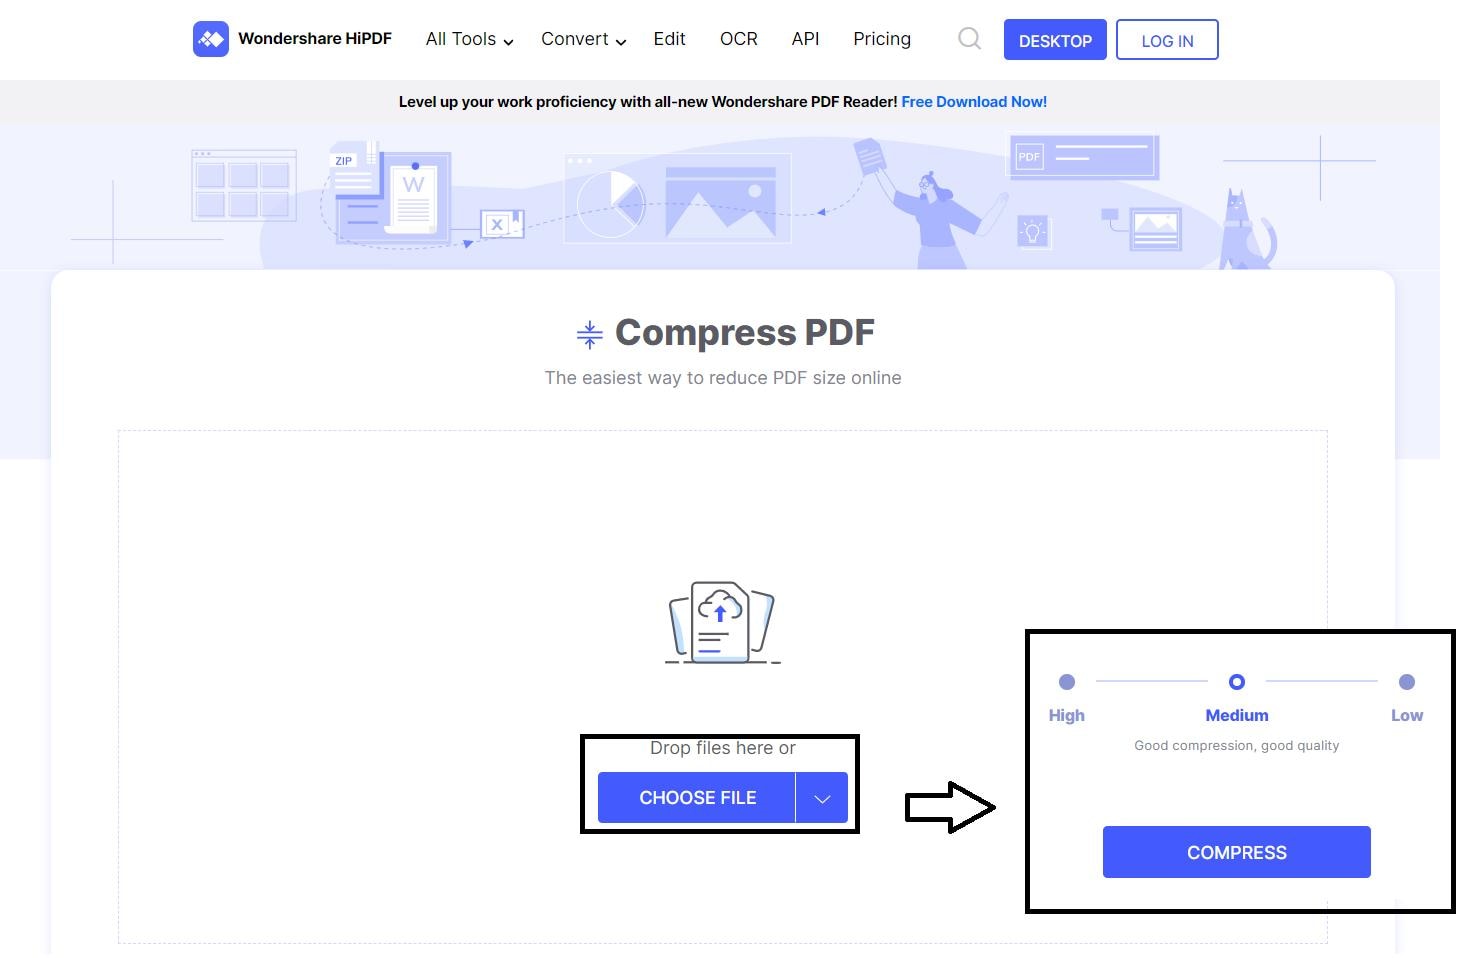 steps to Compress PDF on hipdf